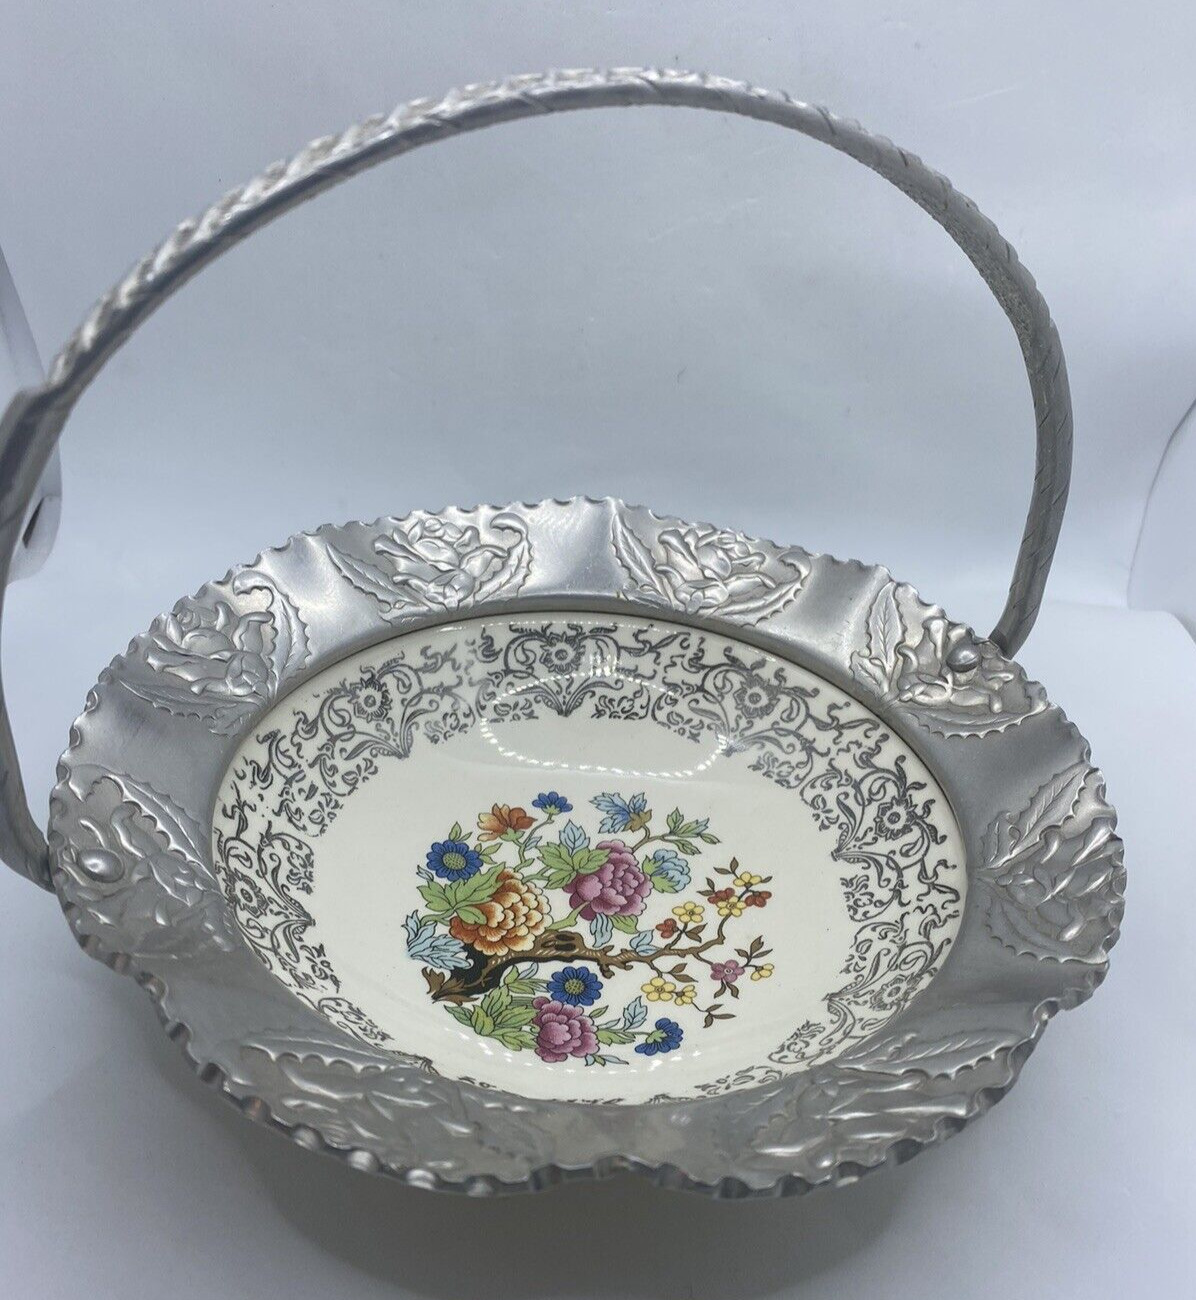 Farber & Shlevin Hammered Aluminum and Porcelain Bowl with Handle Vintage 1940s